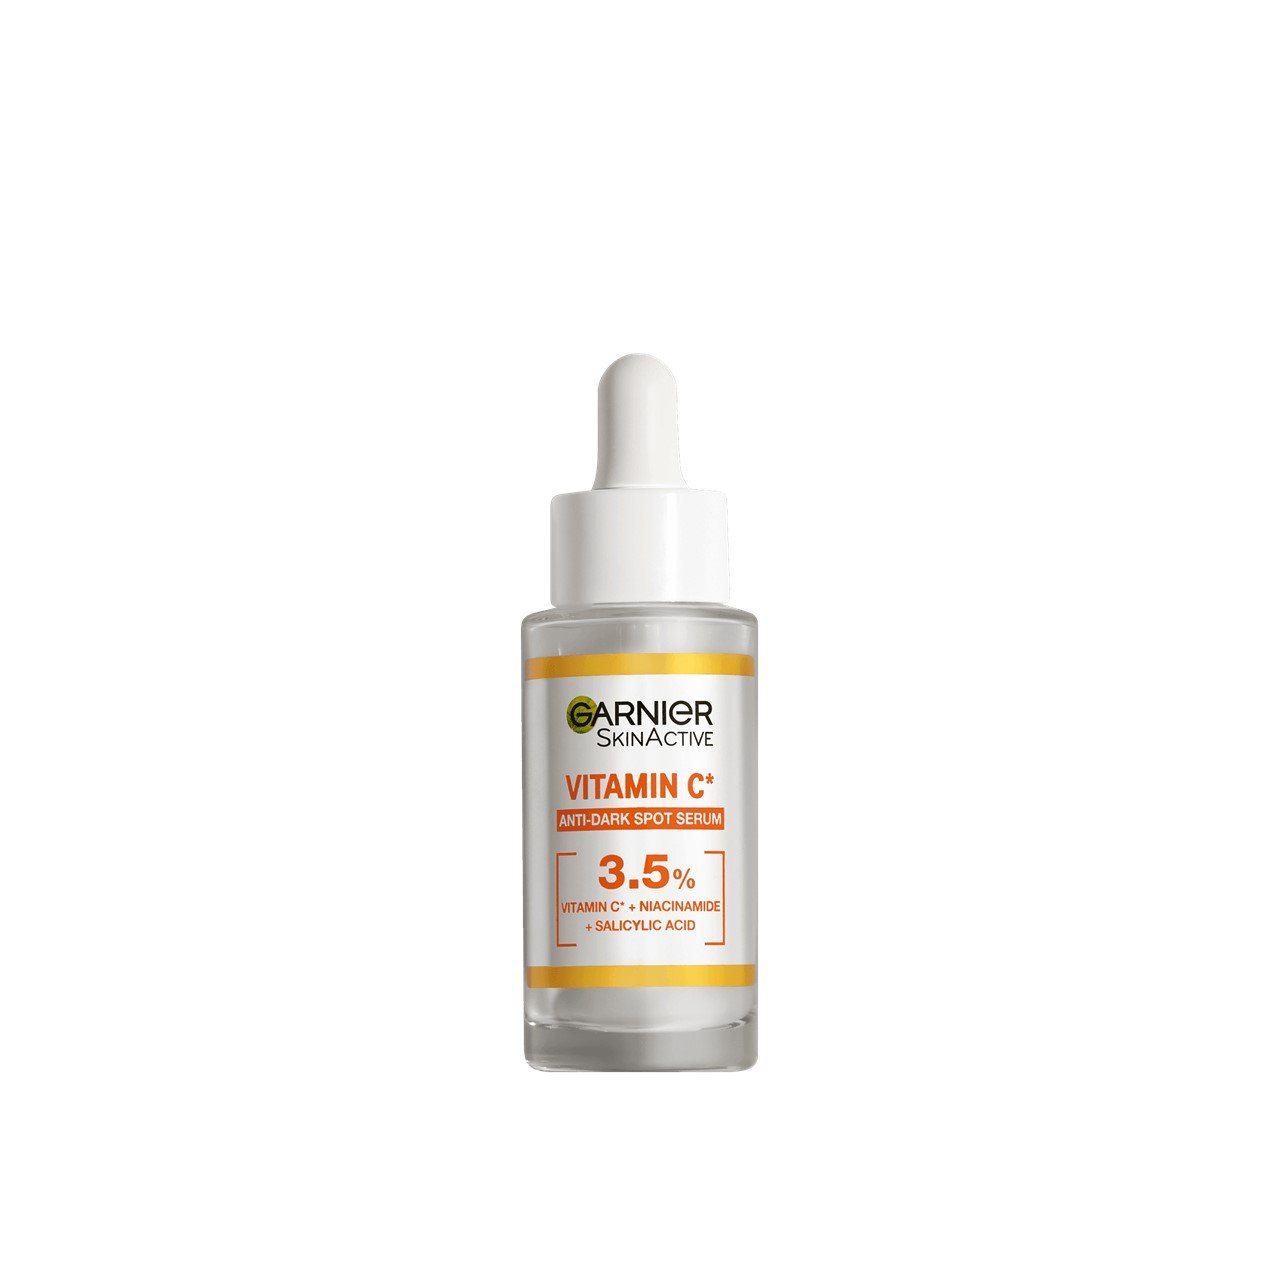 Garnier Skin Active Vitamin C Anti-Dark Spot Serum 30ml (1.01fl oz)